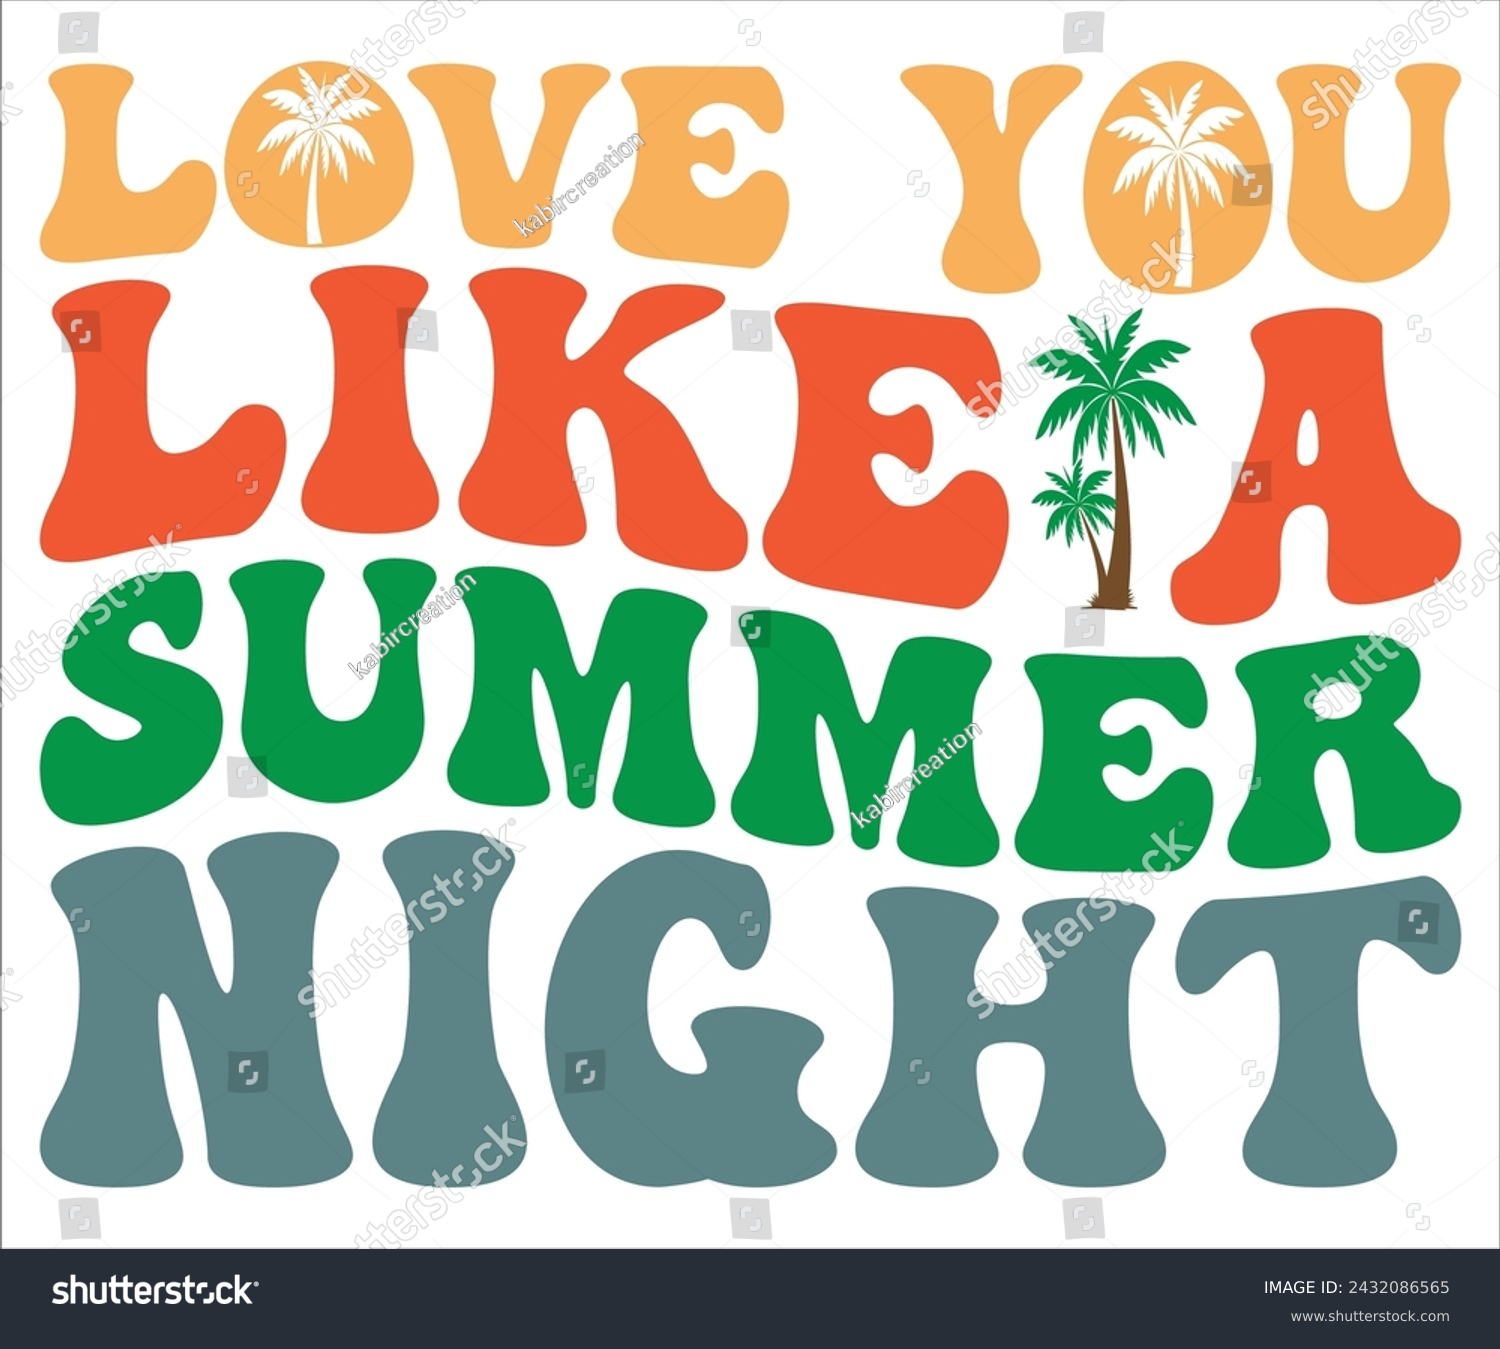 SVG of Love You Like A Summer Night T-shirt, Happy Summer Day T-shirt, Happy Summer Day Retro svg,Hello Summer Retro Svg,summer Beach Vibes Shirt, Vacation, Cut File for Cricut svg